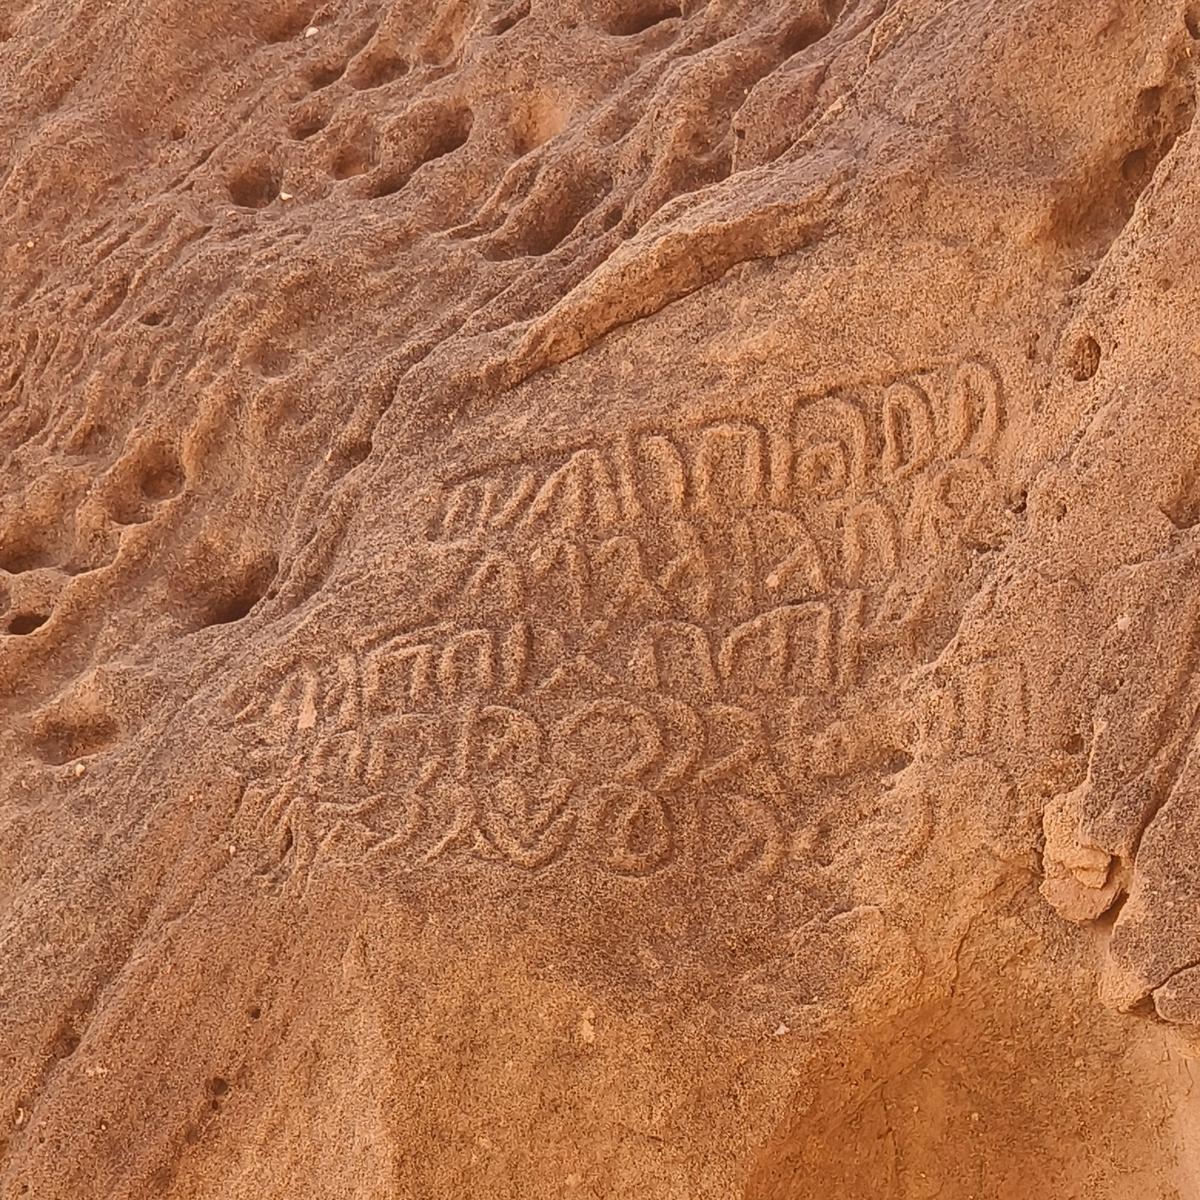 Inscriptions at Jabal Ikmah